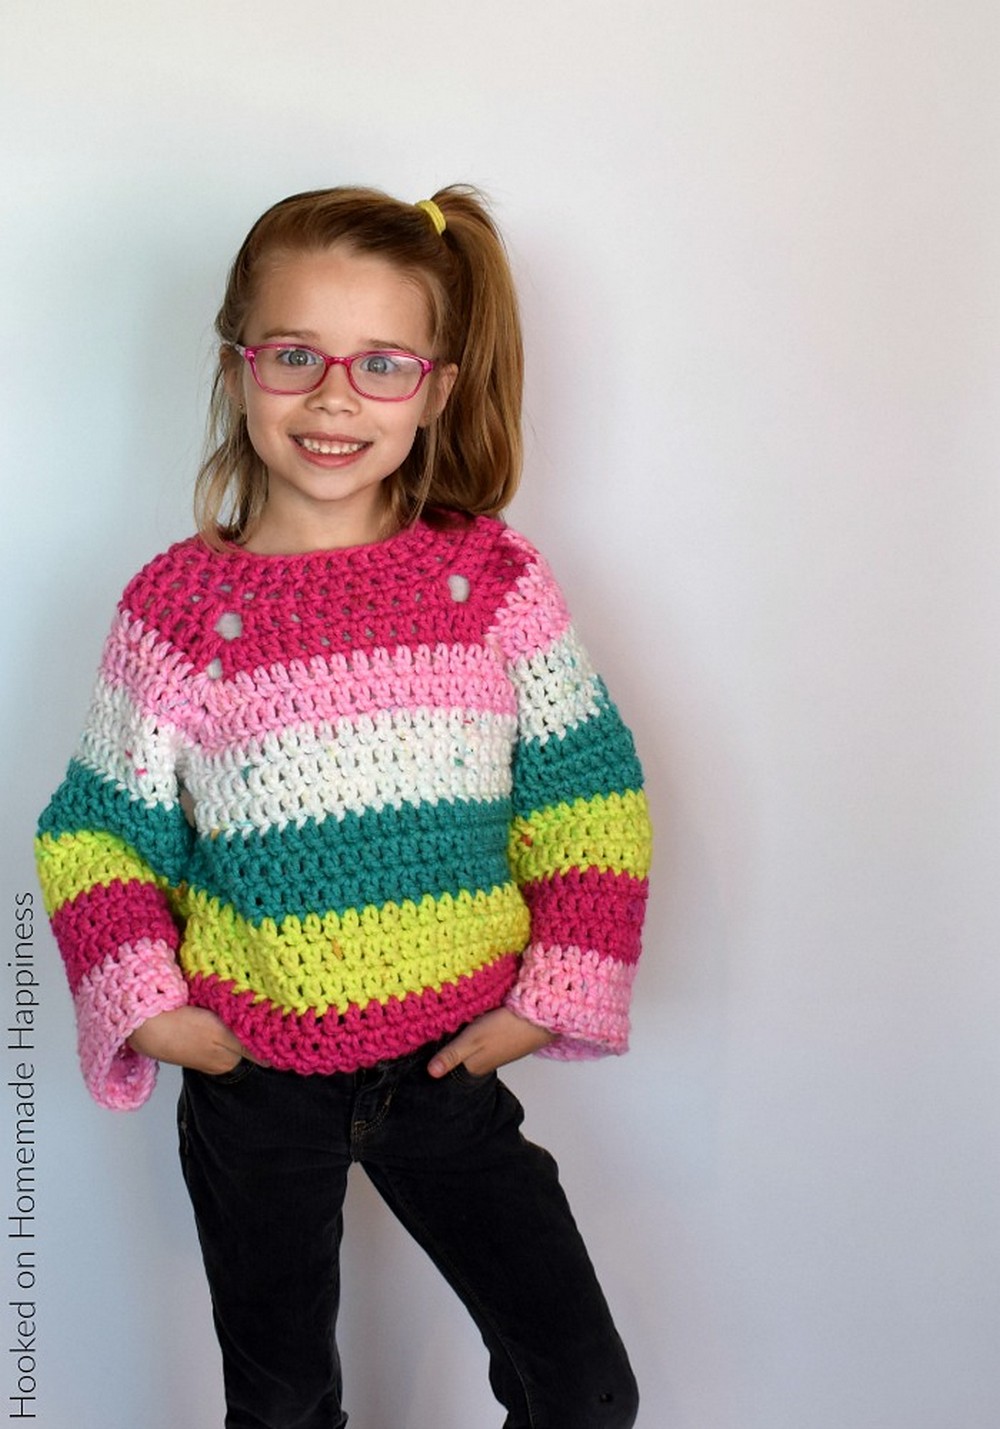 Crochet pattern for a chunky raglan sweater for children